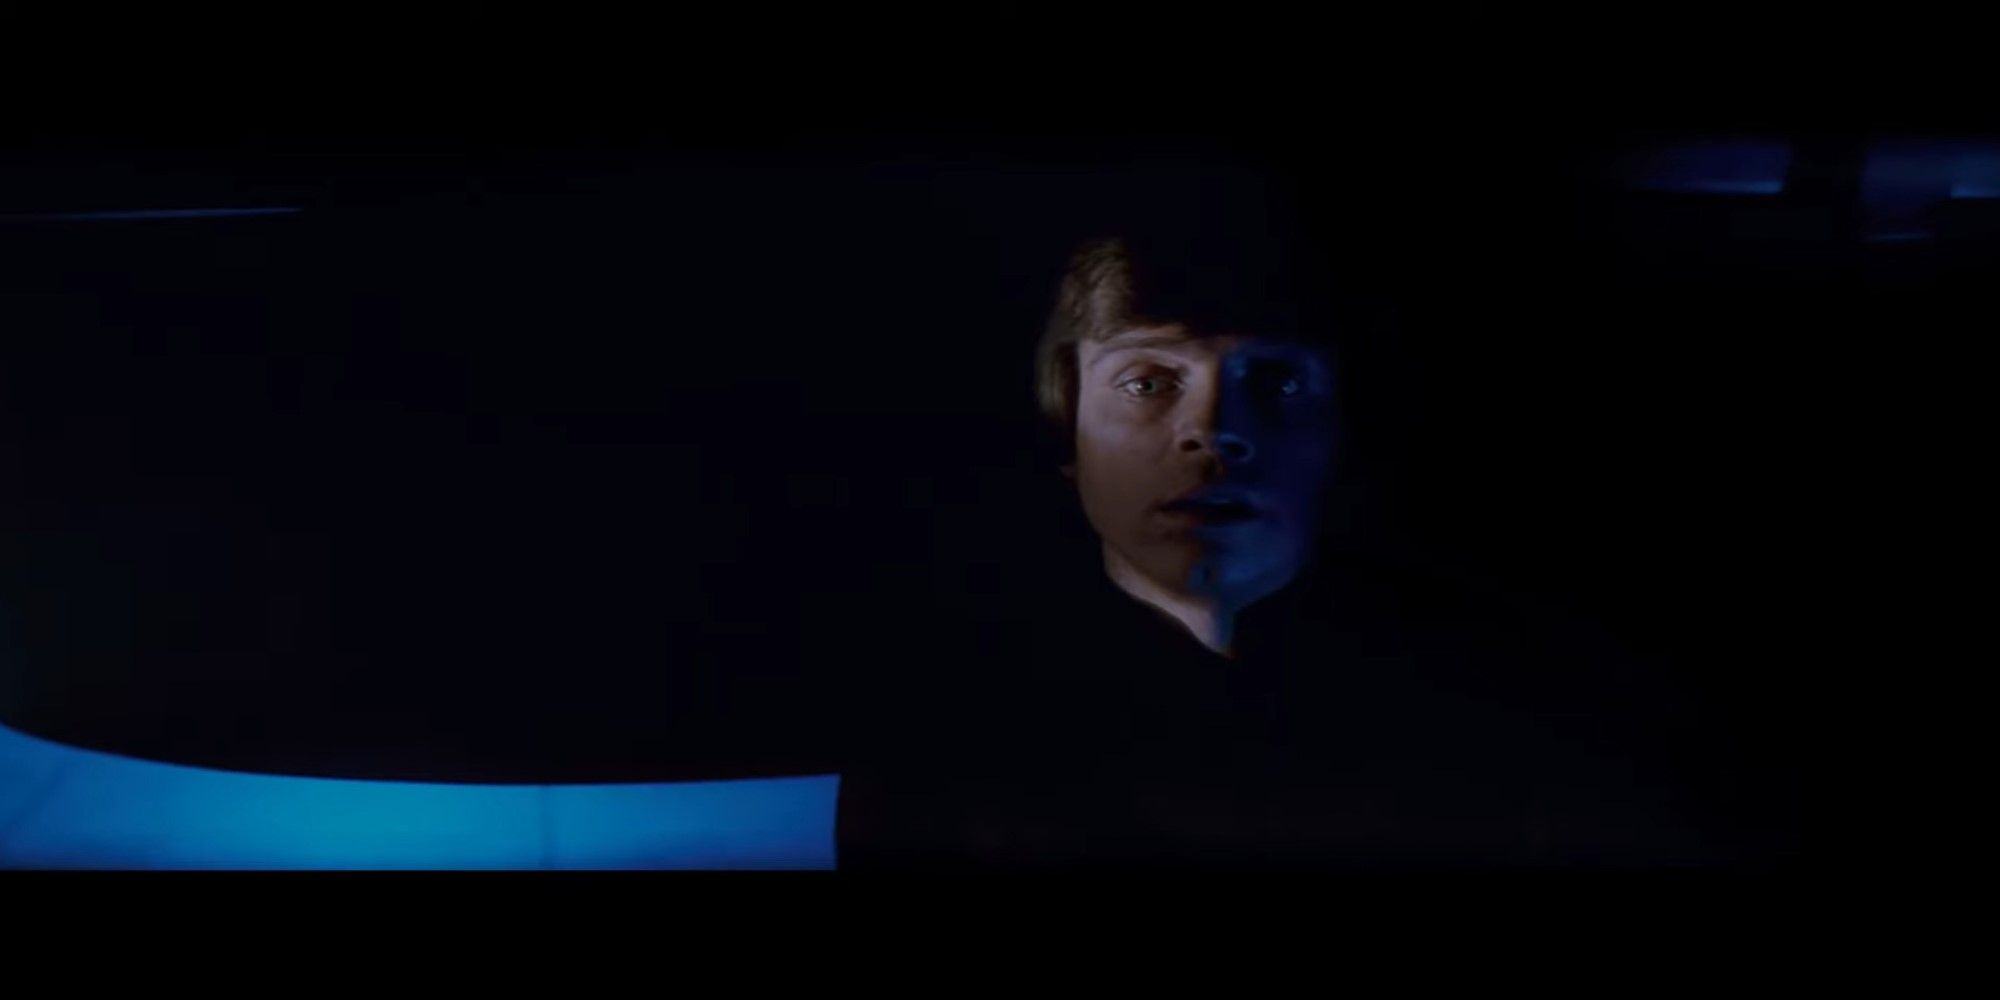 Luke Skywalker escapes from Darth Vader in Return of the Jedi.